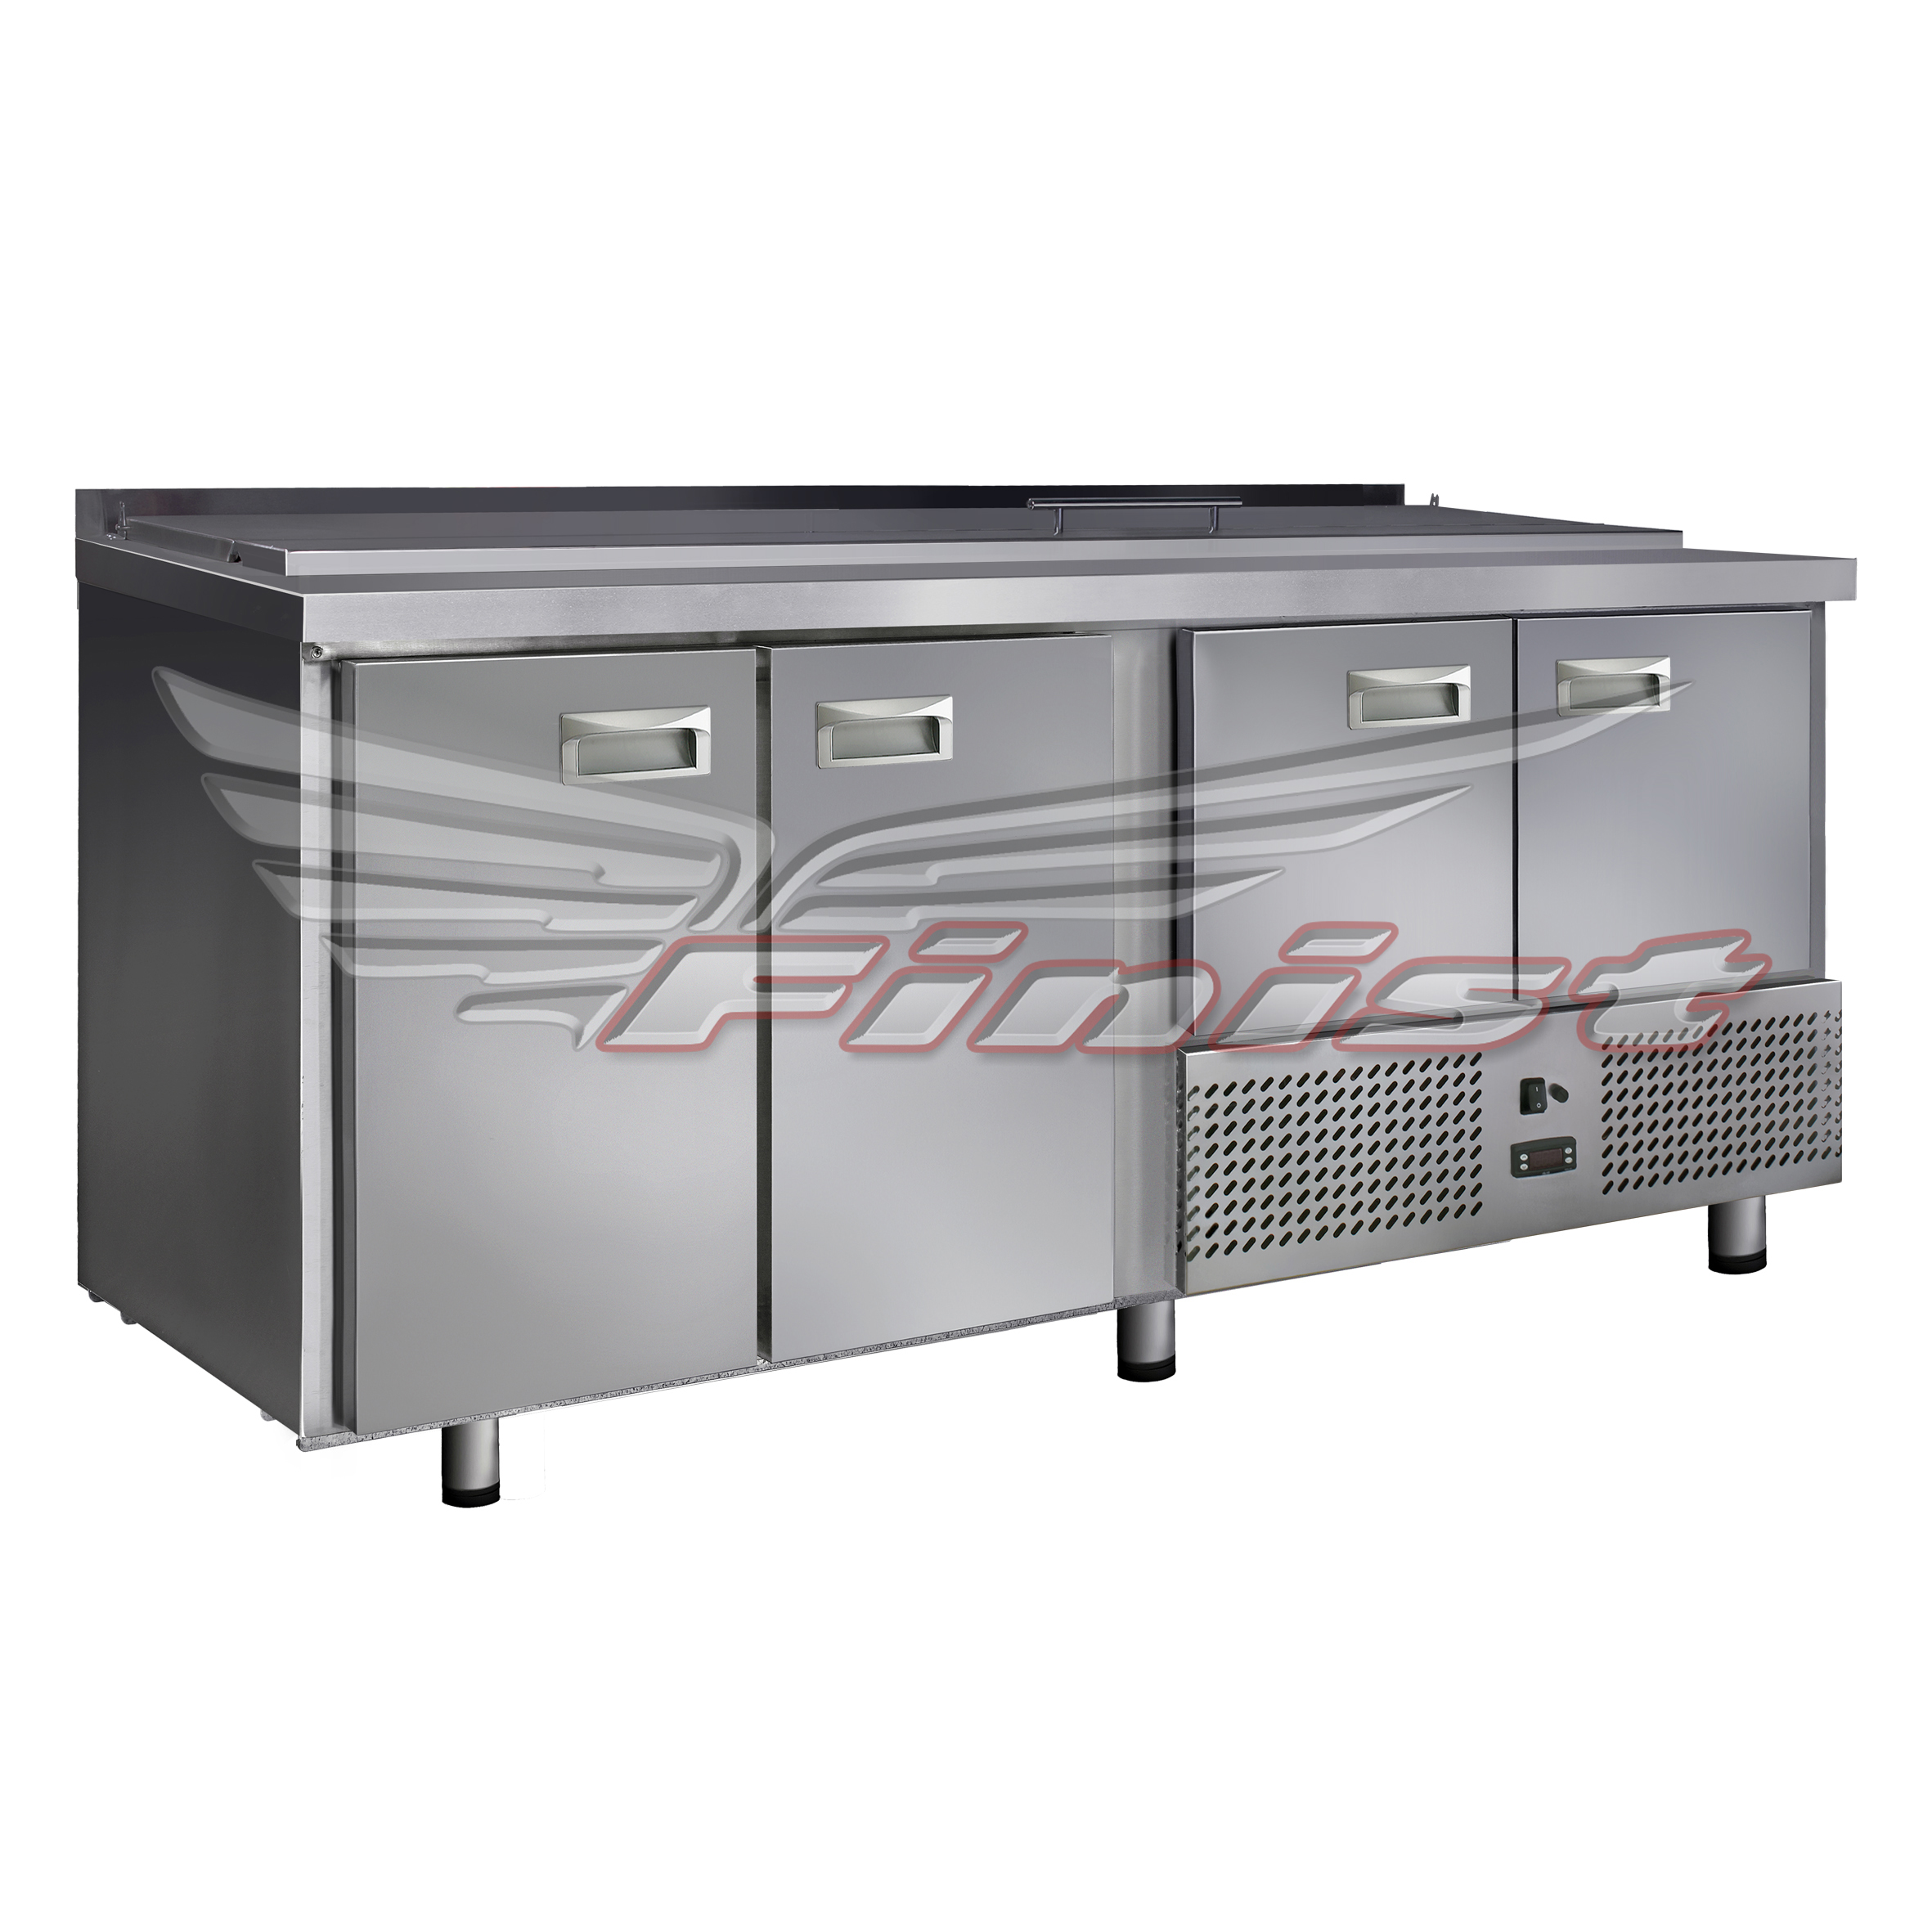 Стол холодильный для салатов Finist СХСнс-700-4 нижний агрегат 1900х700x850 мм